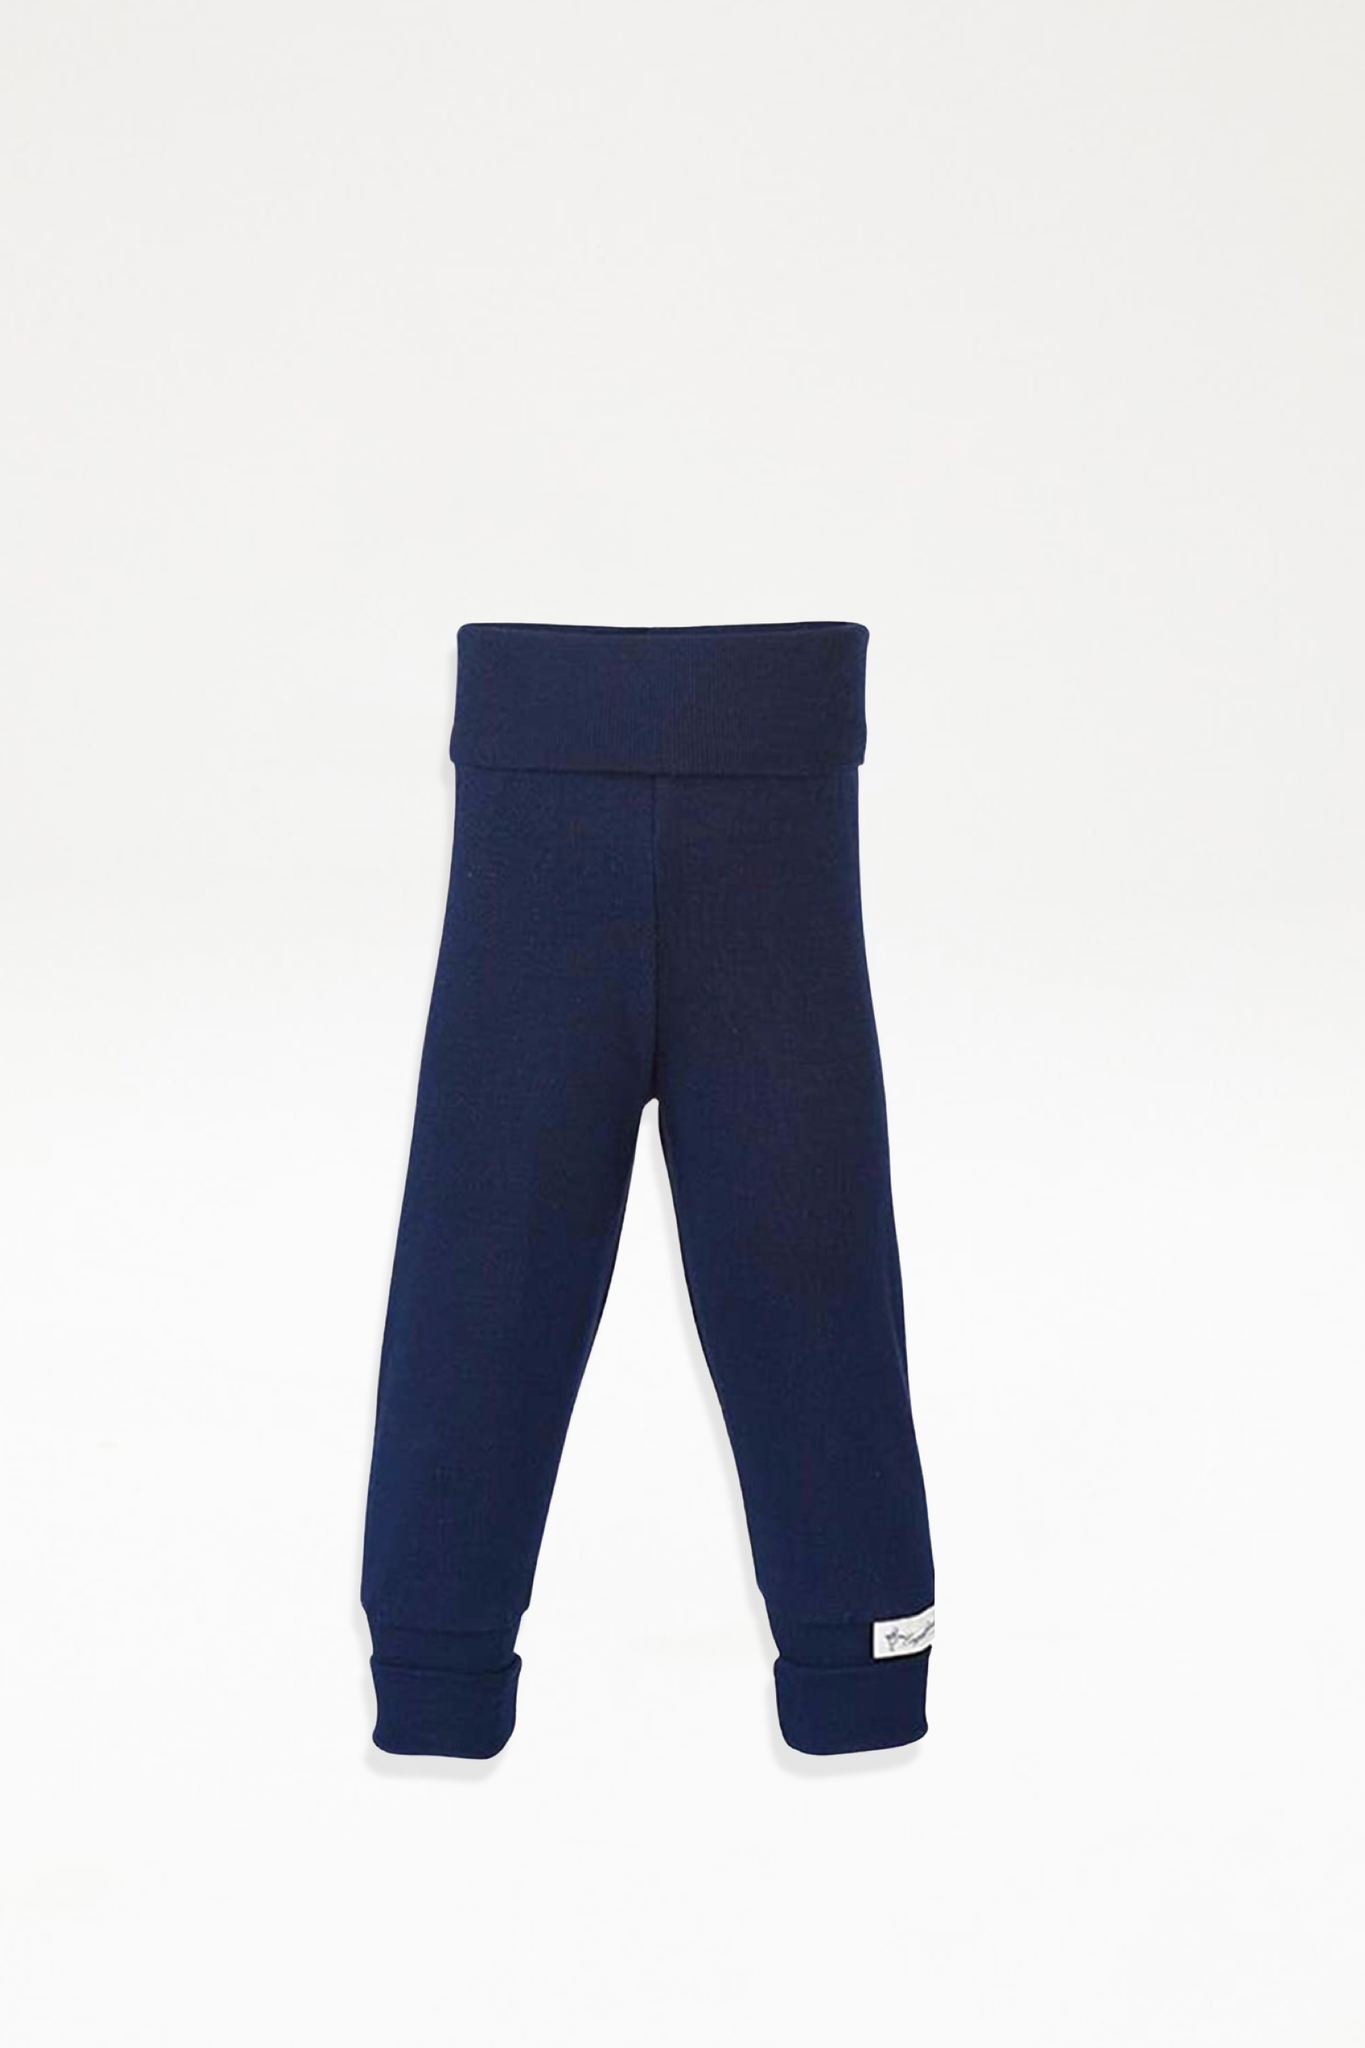 Engel - Baby Organic Cotton Pants - Navy